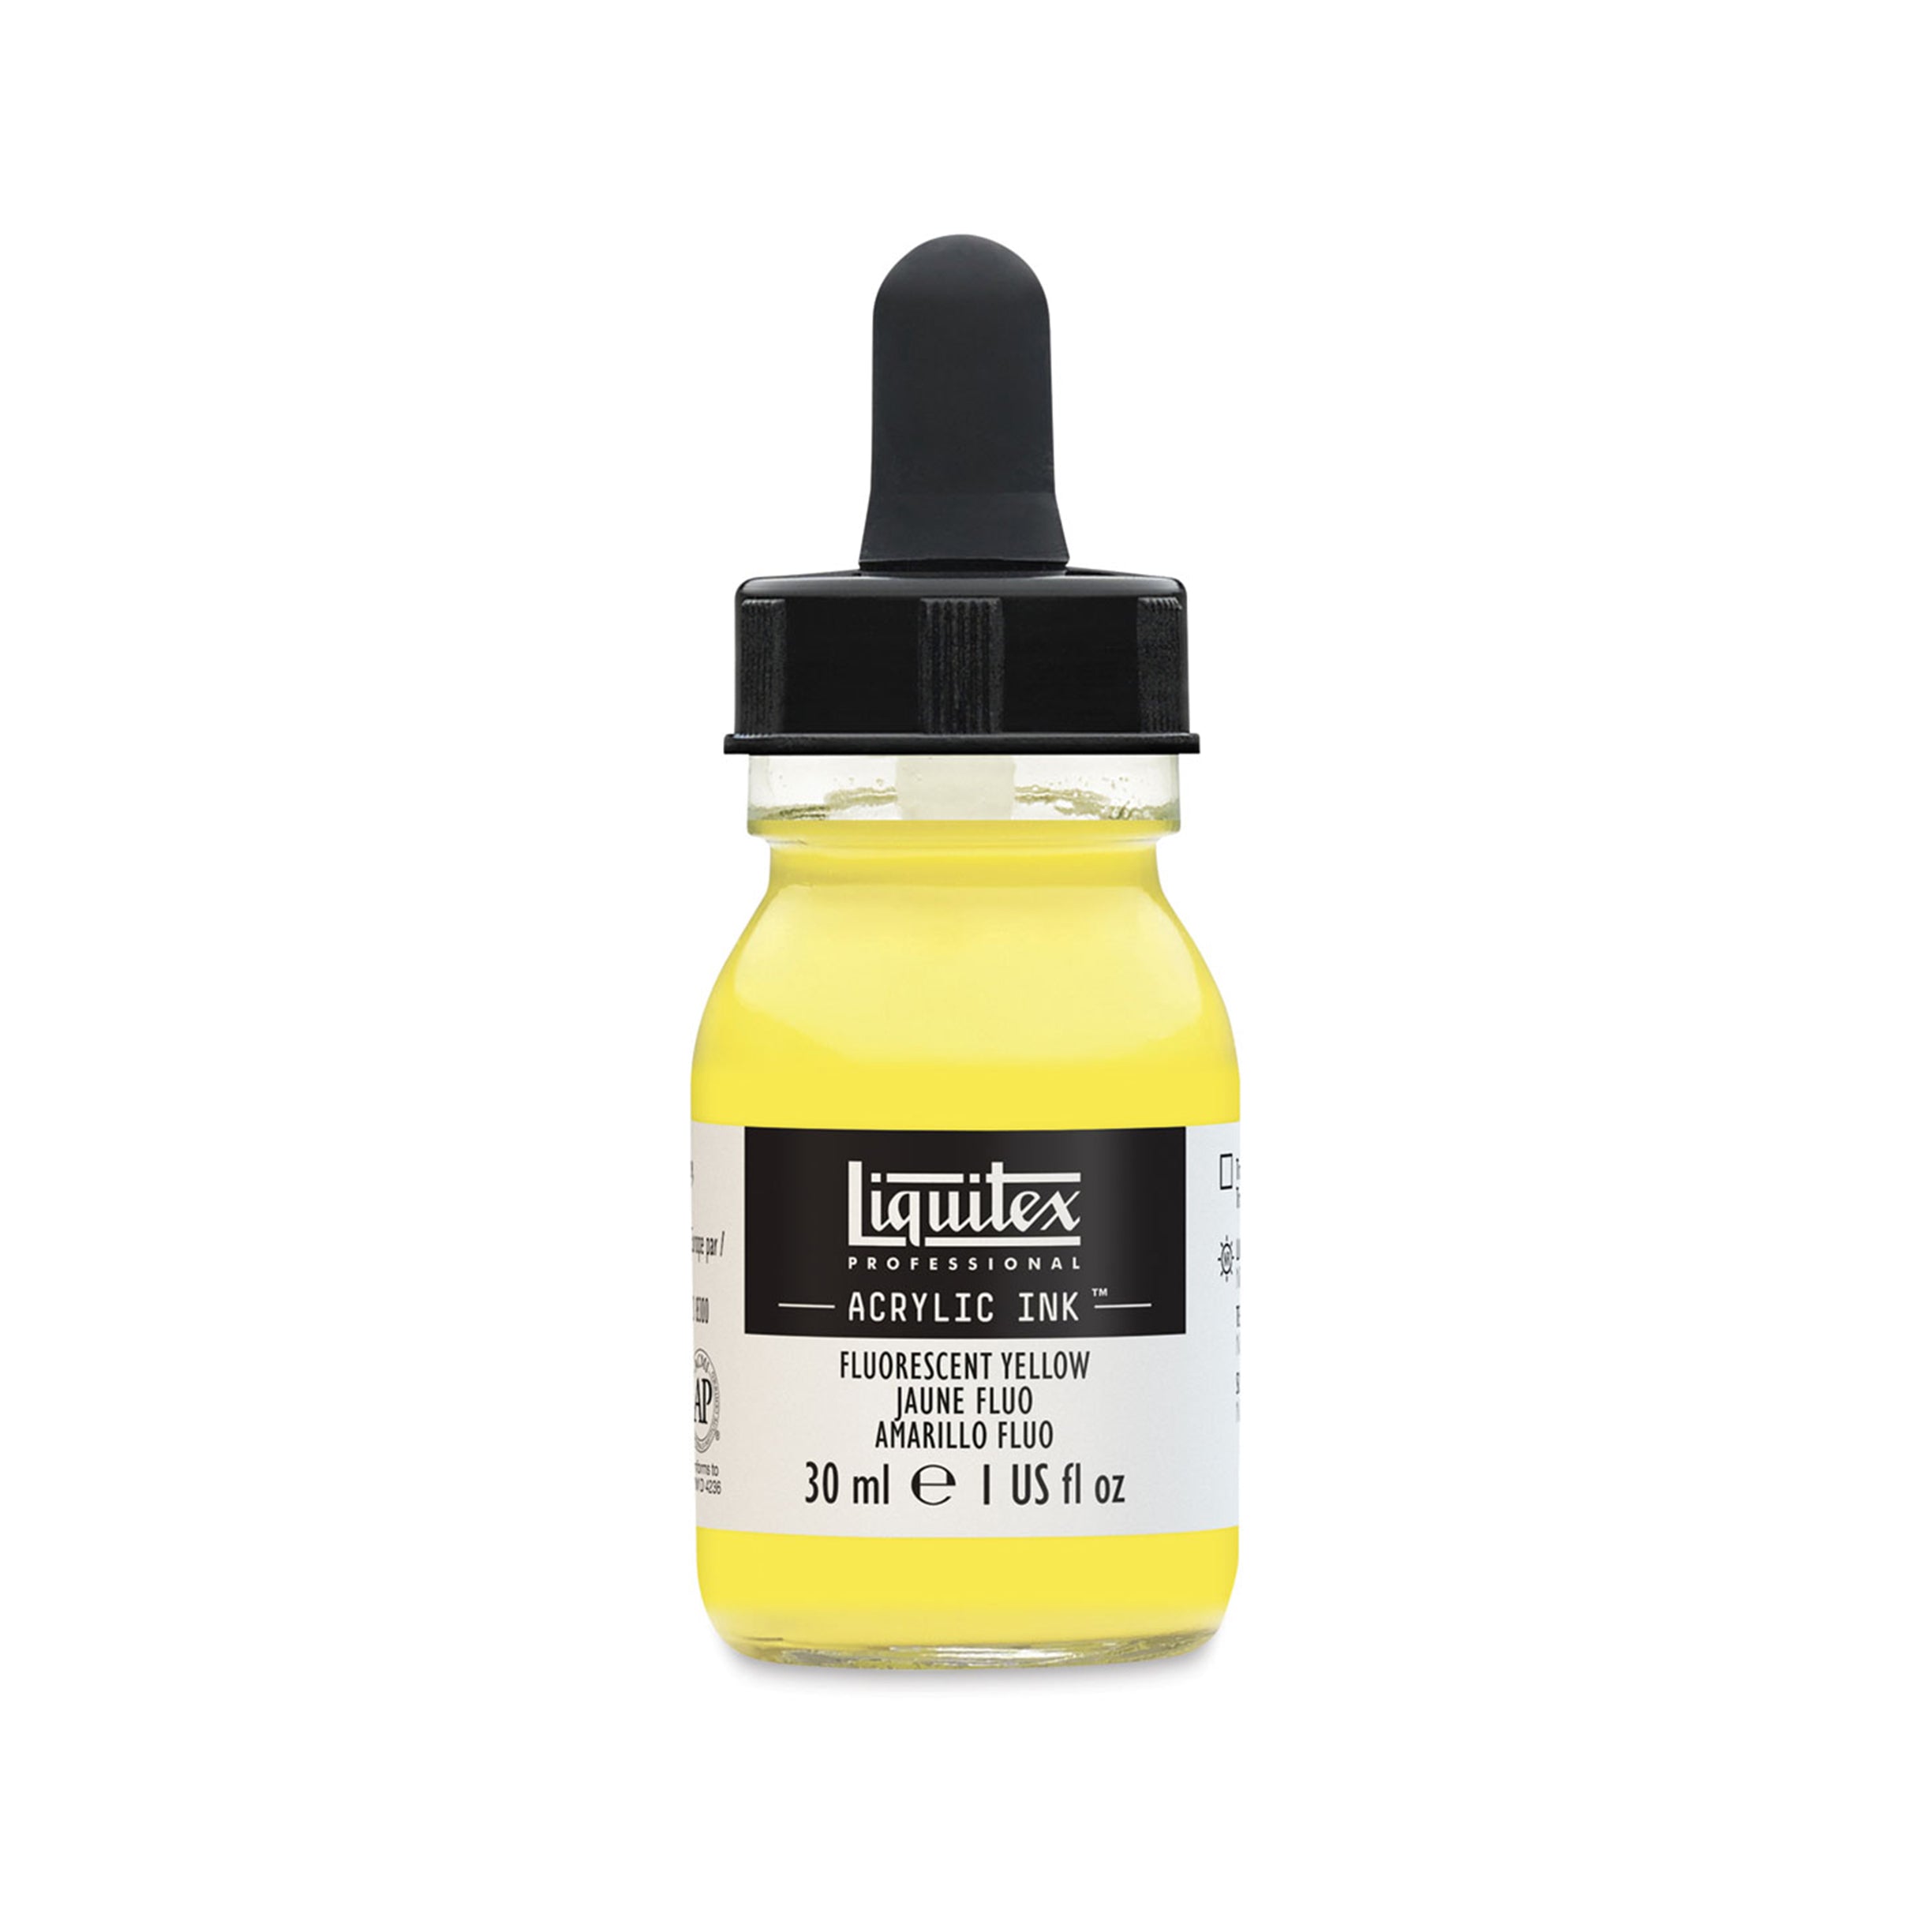 Liquitex Professional Acrylic Ink - 30 mL, Fluorescent Yellow